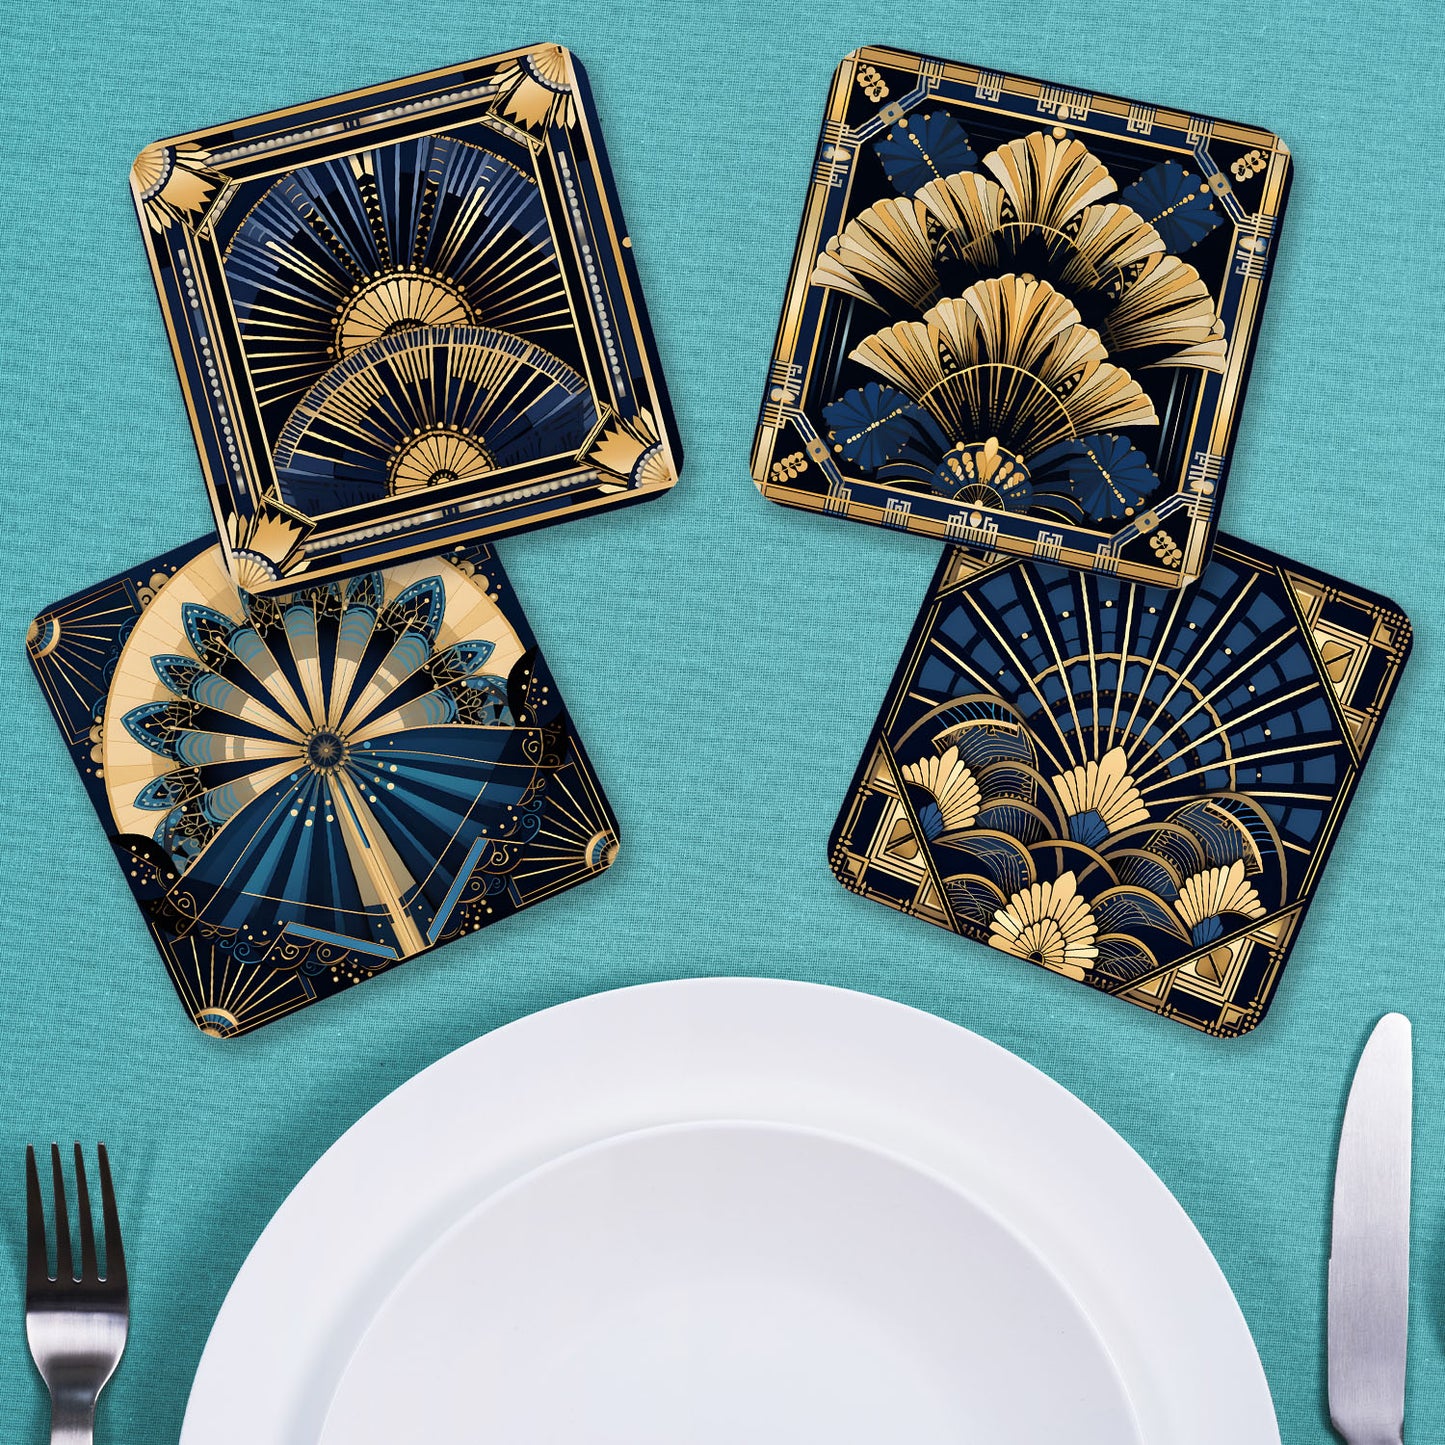 Deco Elegance In Blue Art Deco Set Of 4 PU Leather Coasters